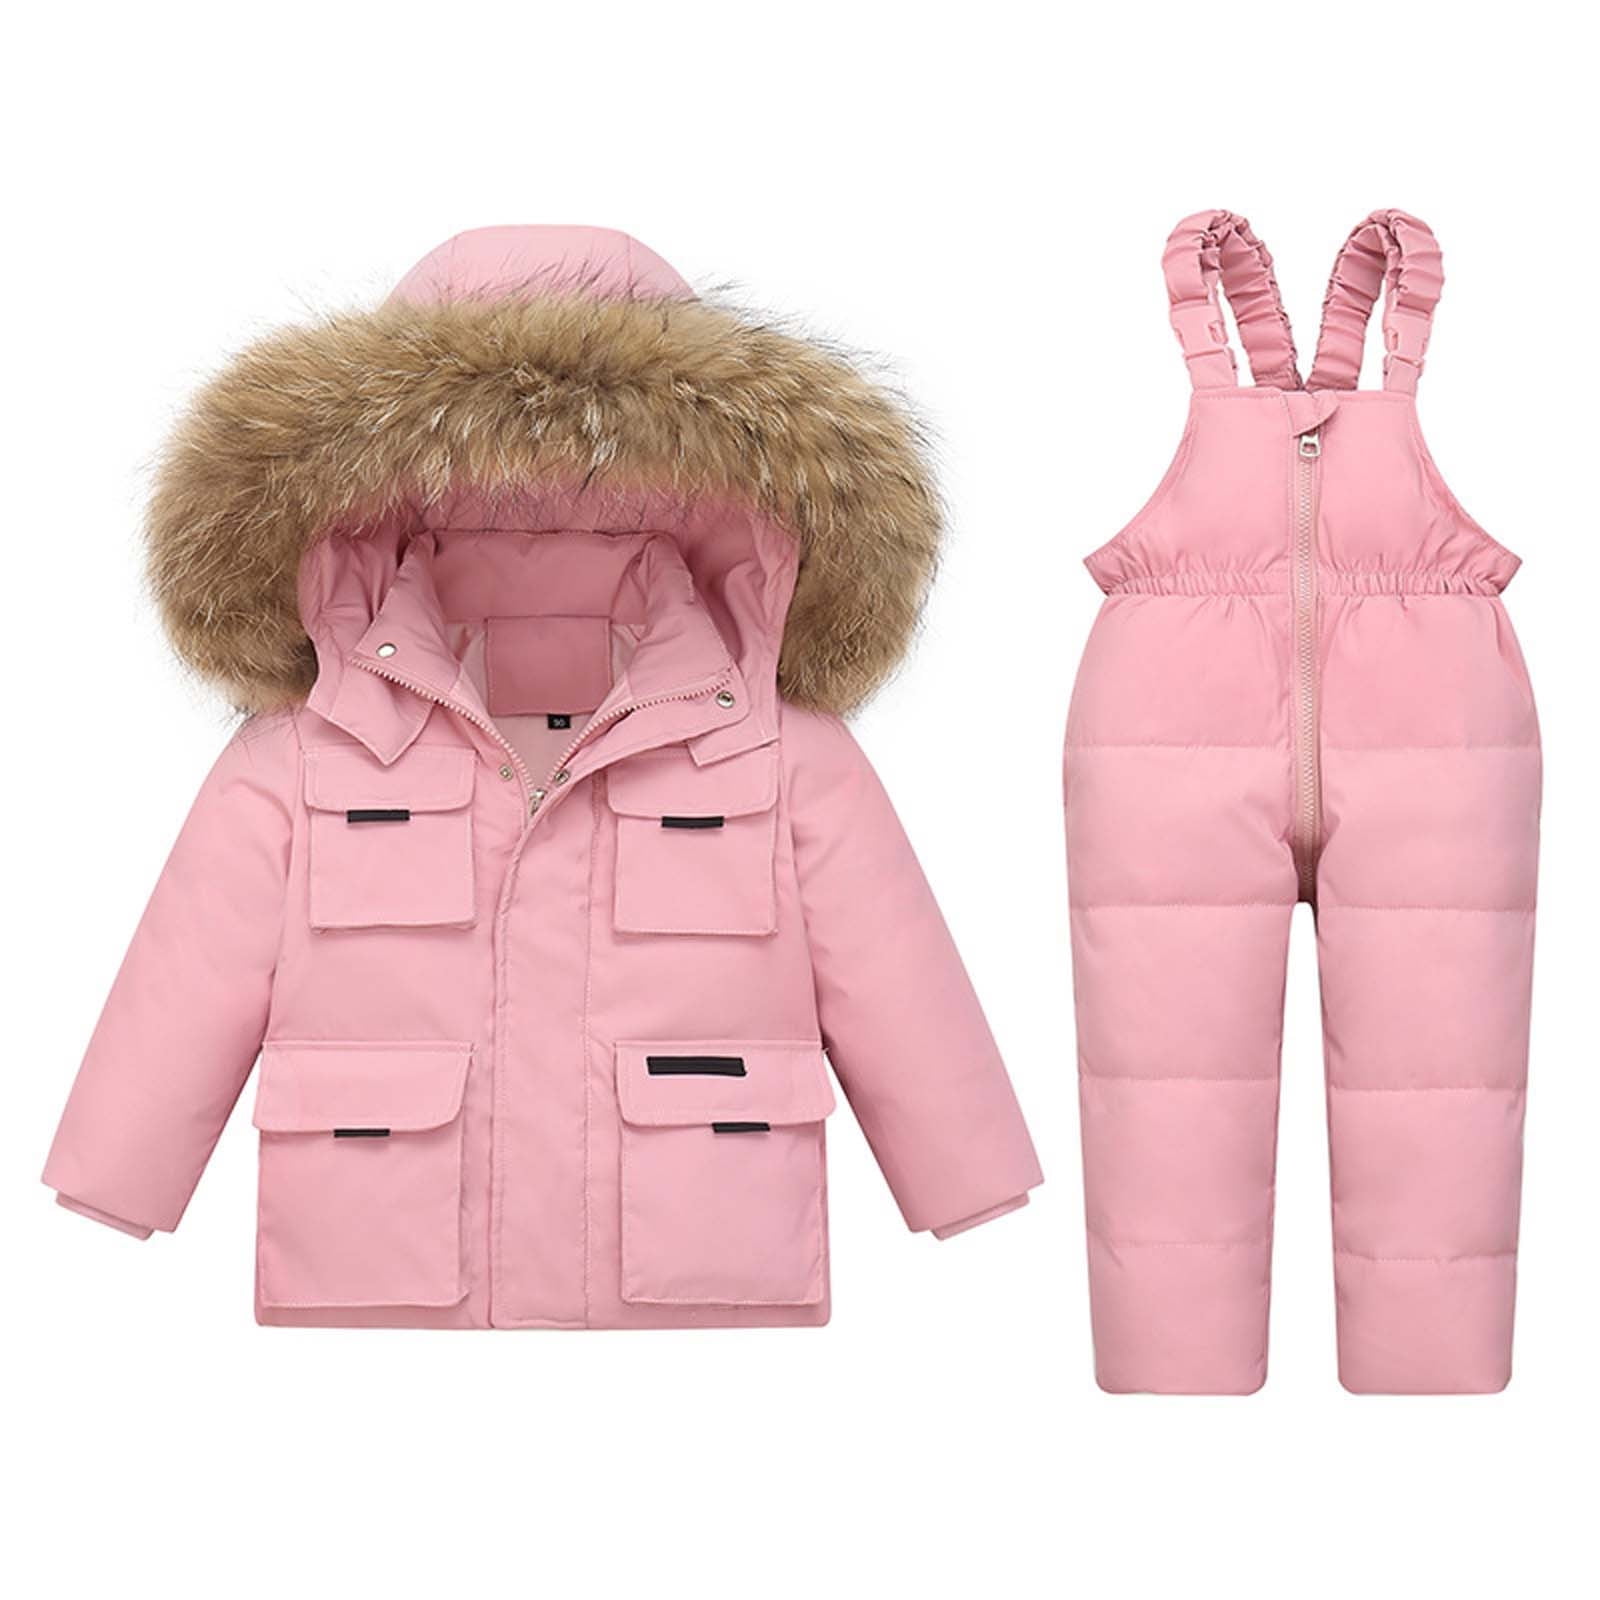 CARETOO Baby Boys Girls Winter Down Coats Snowsuit Outerwear 2Pcs Clothes Hooded Jacket Snow Ski Bib Pants Outfits Set